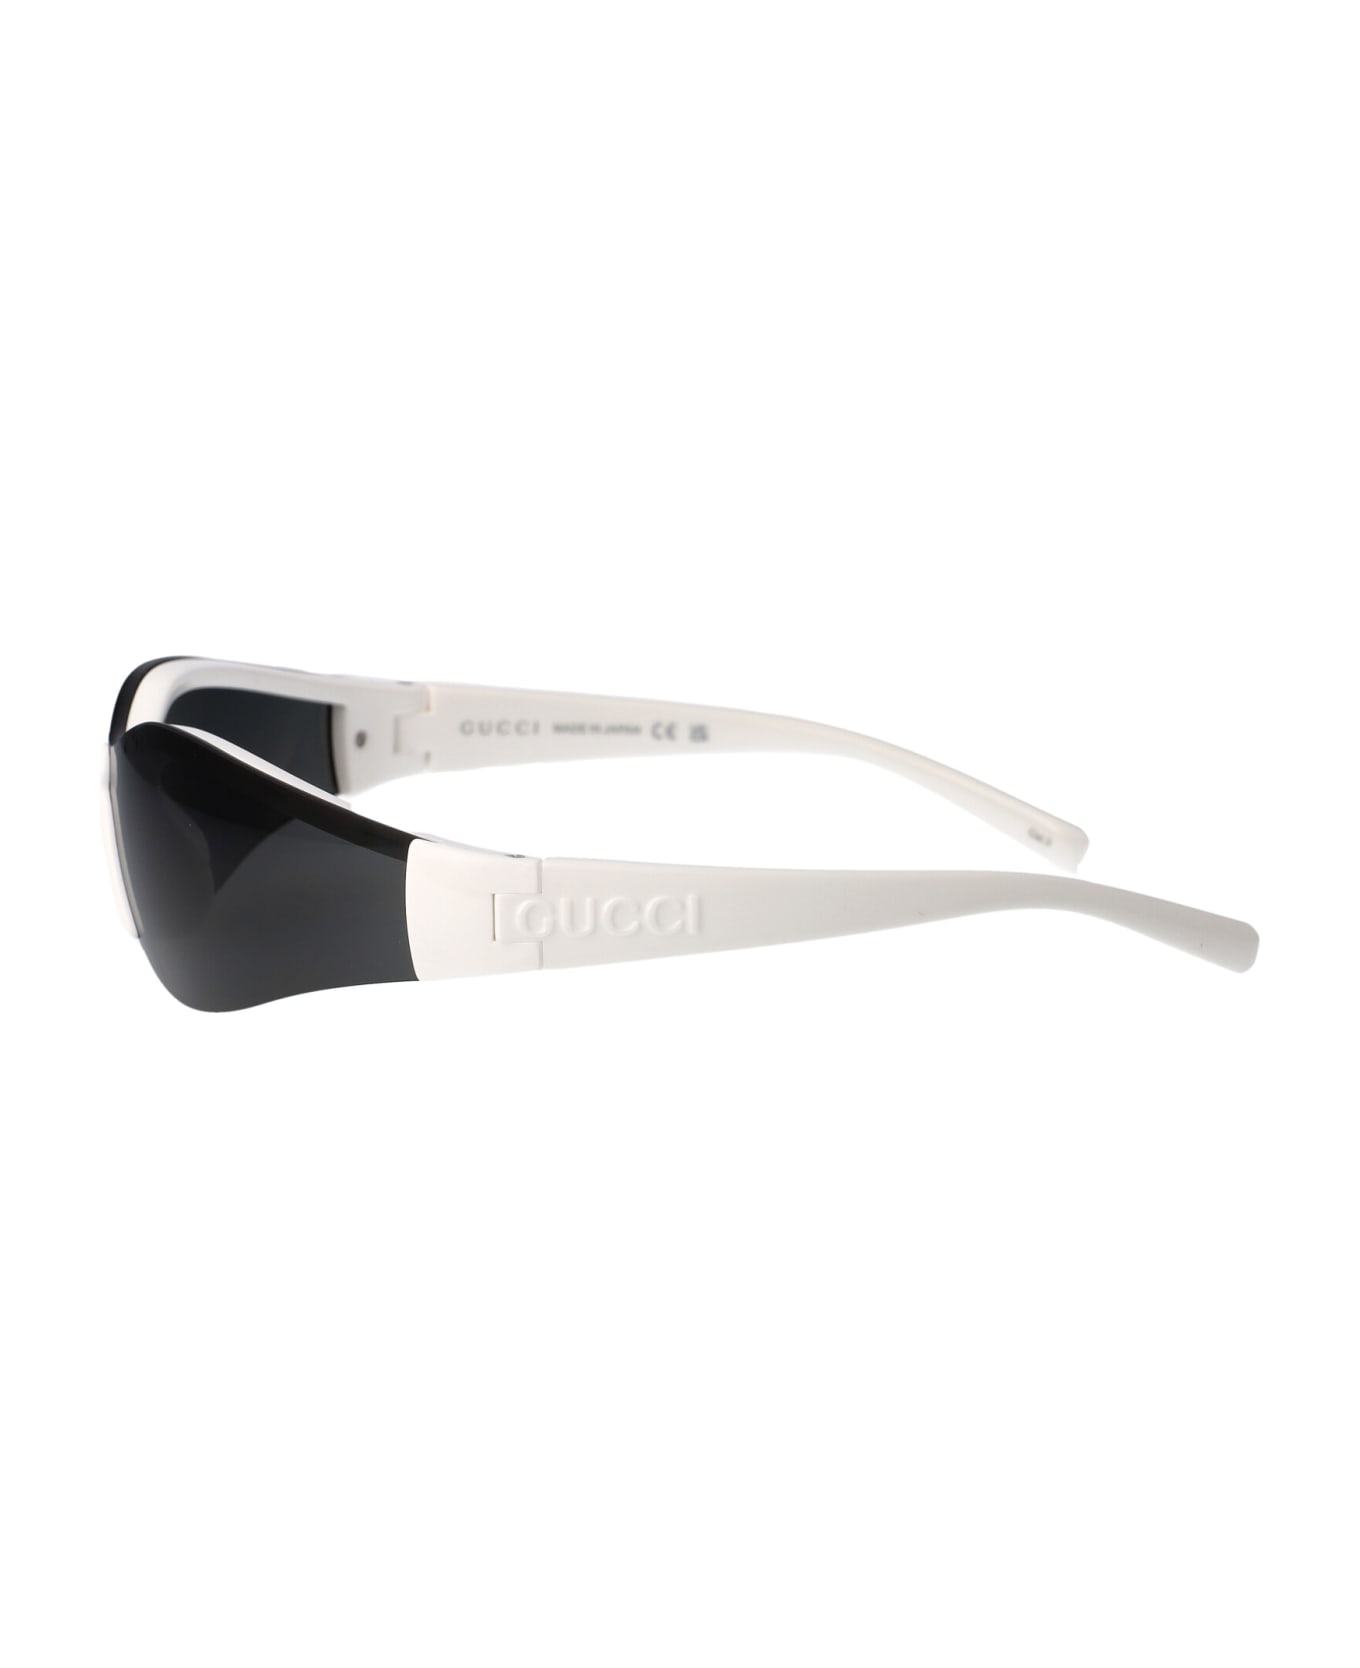 Gucci Eyewear Gg1651s Sunglasses - 006 WHITE WHITE GREY